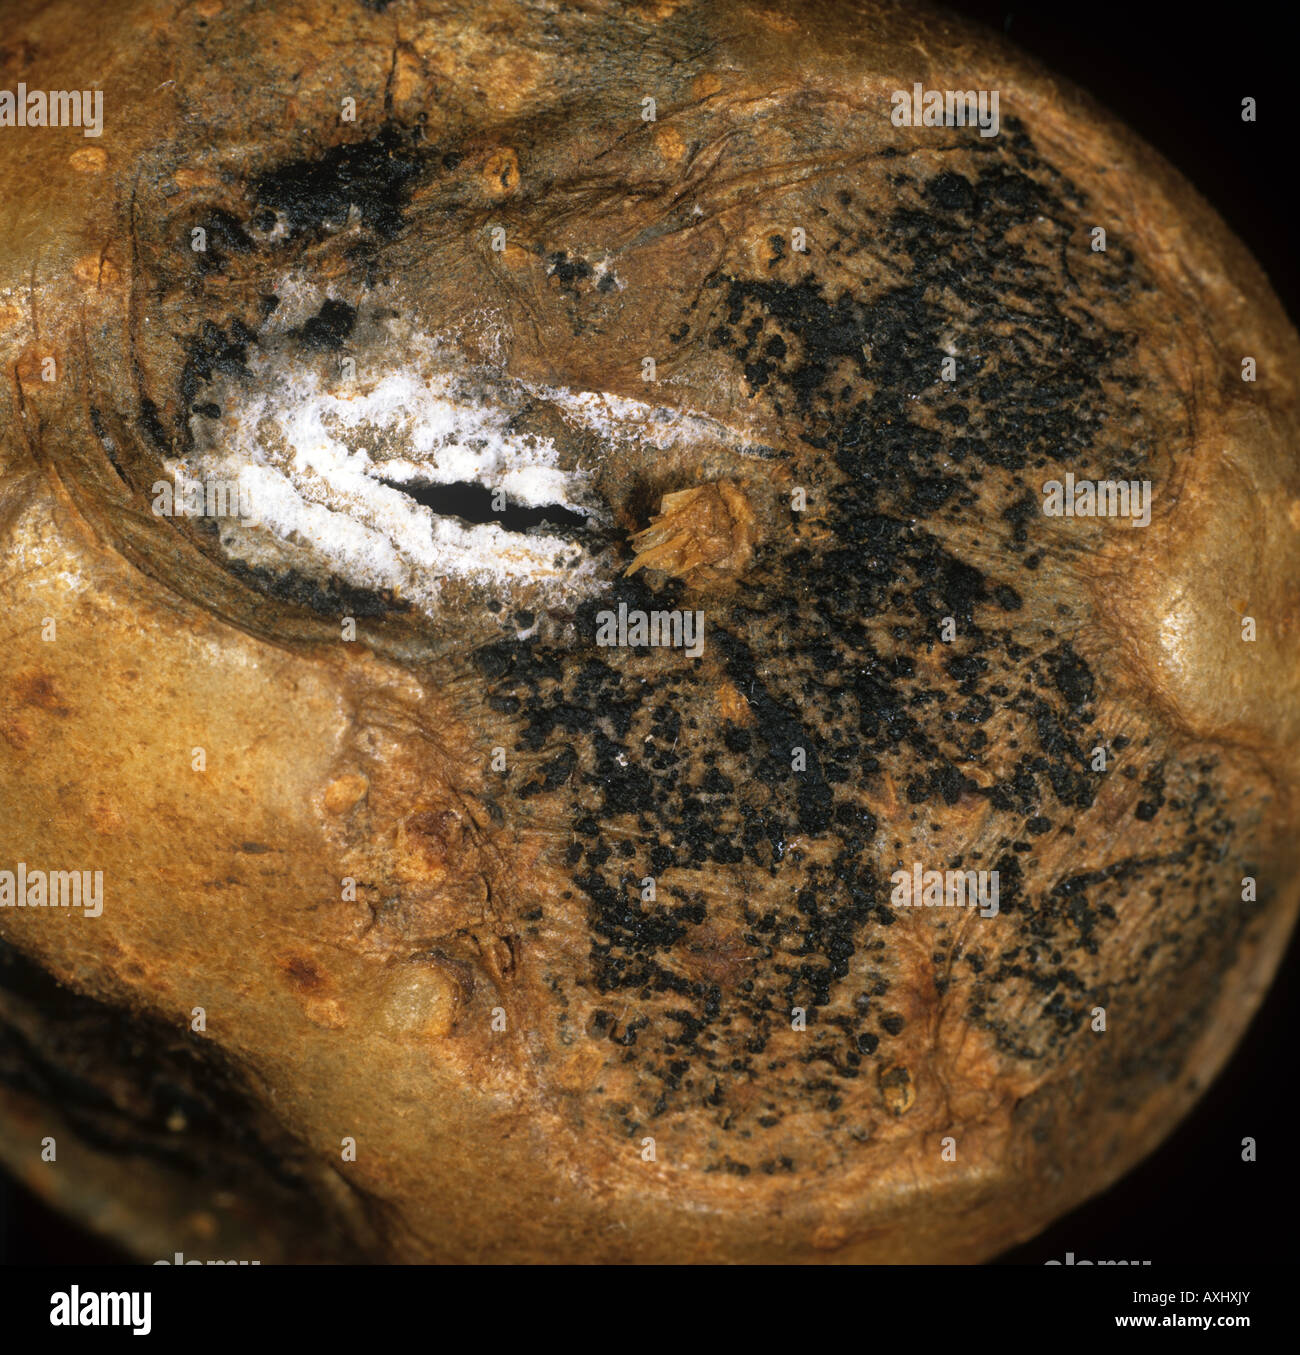 Gangrene Phoma exigua var foveata mycelium and pycnidia on a potato tuber surface Stock Photo